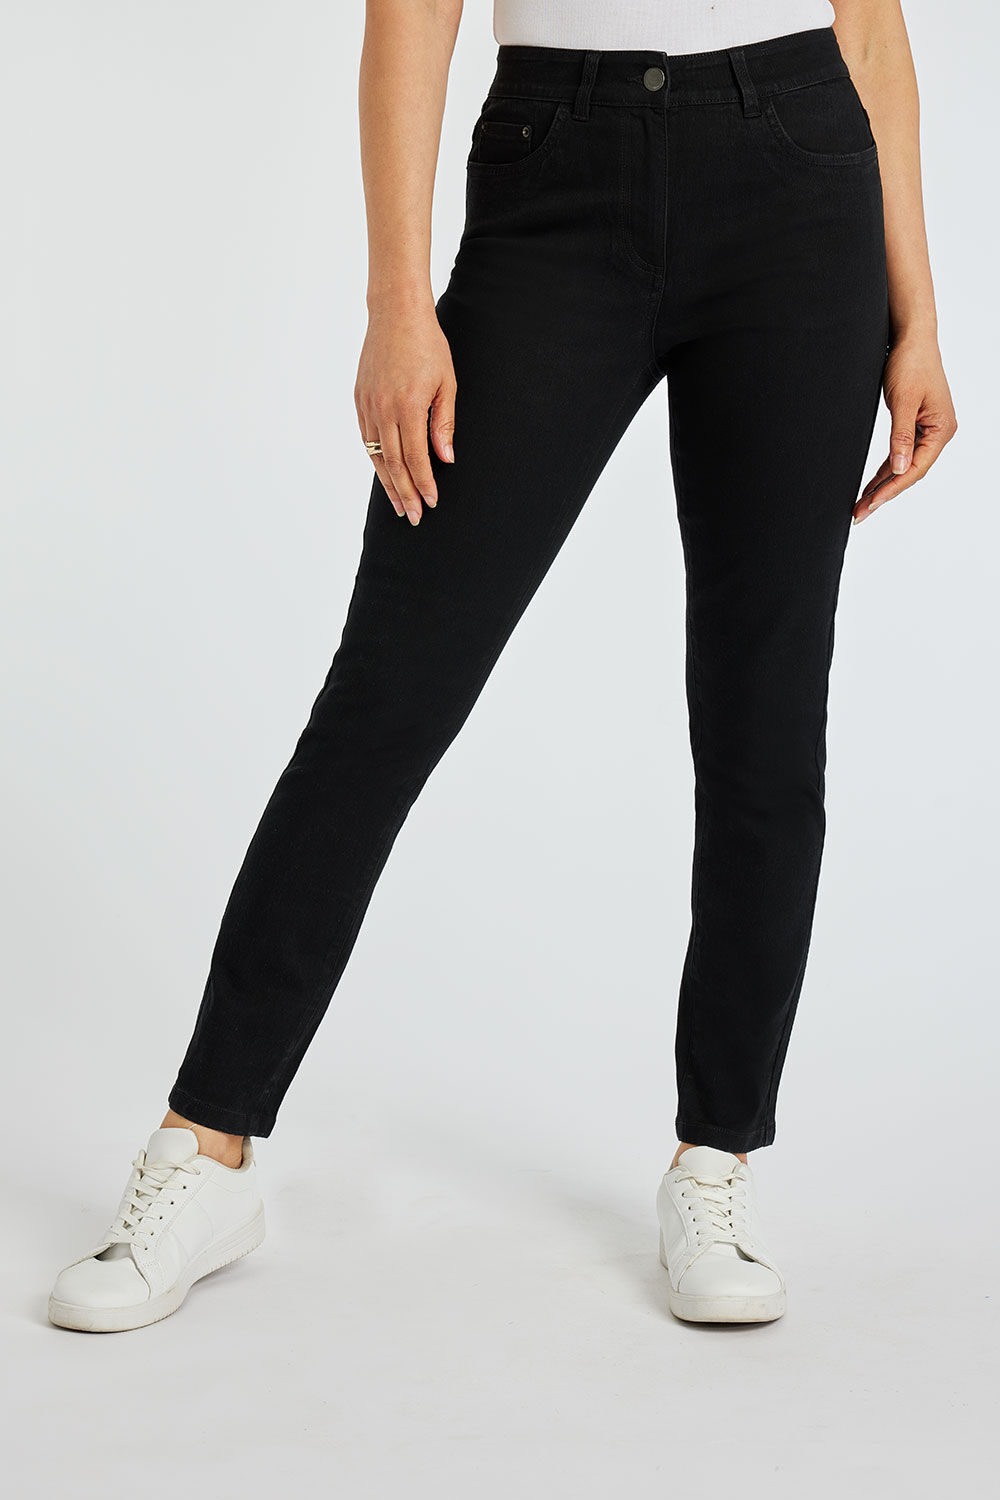 Bonmarche Black The Susie Slim Leg Jeans, Size: 12